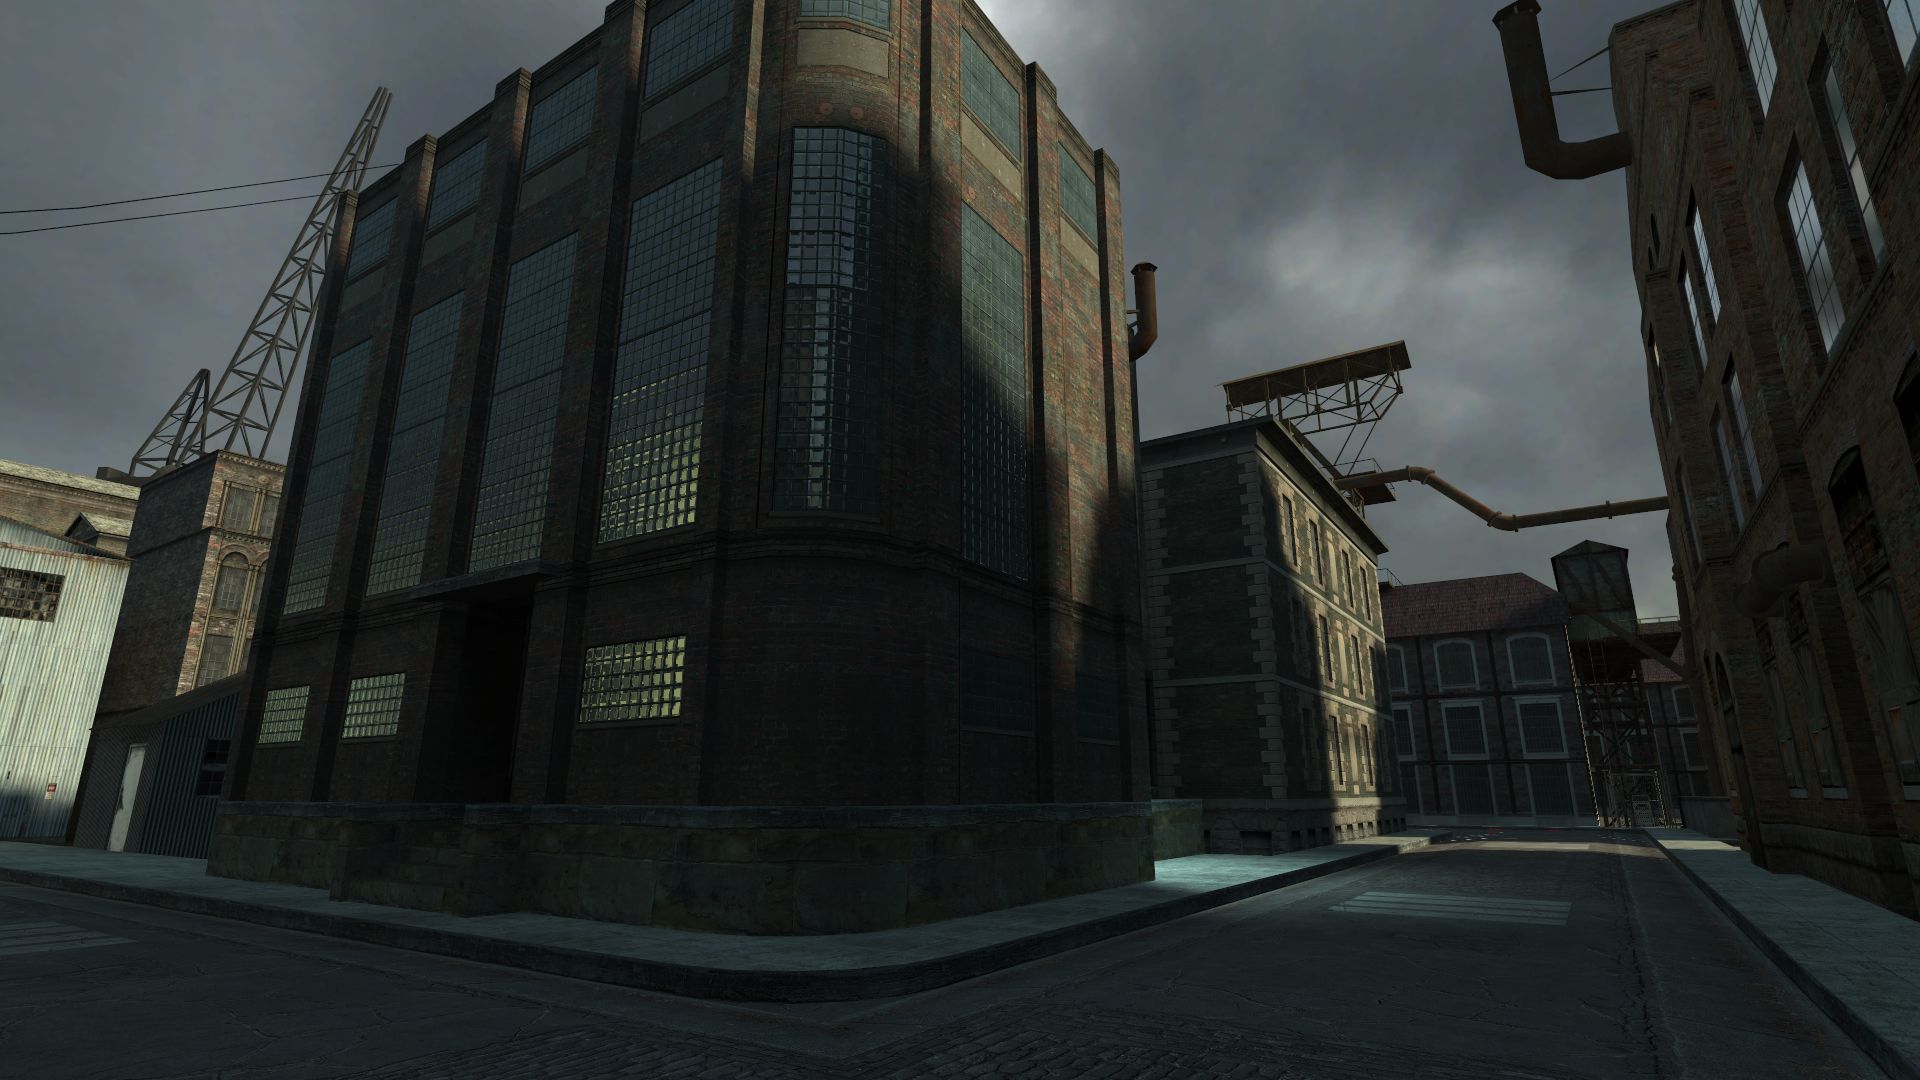 Бетлайф. Half Life 2 buildings. Город из халф лайф 2 бета. Half Life 2 Beta Maps. Префаб Индастриал.